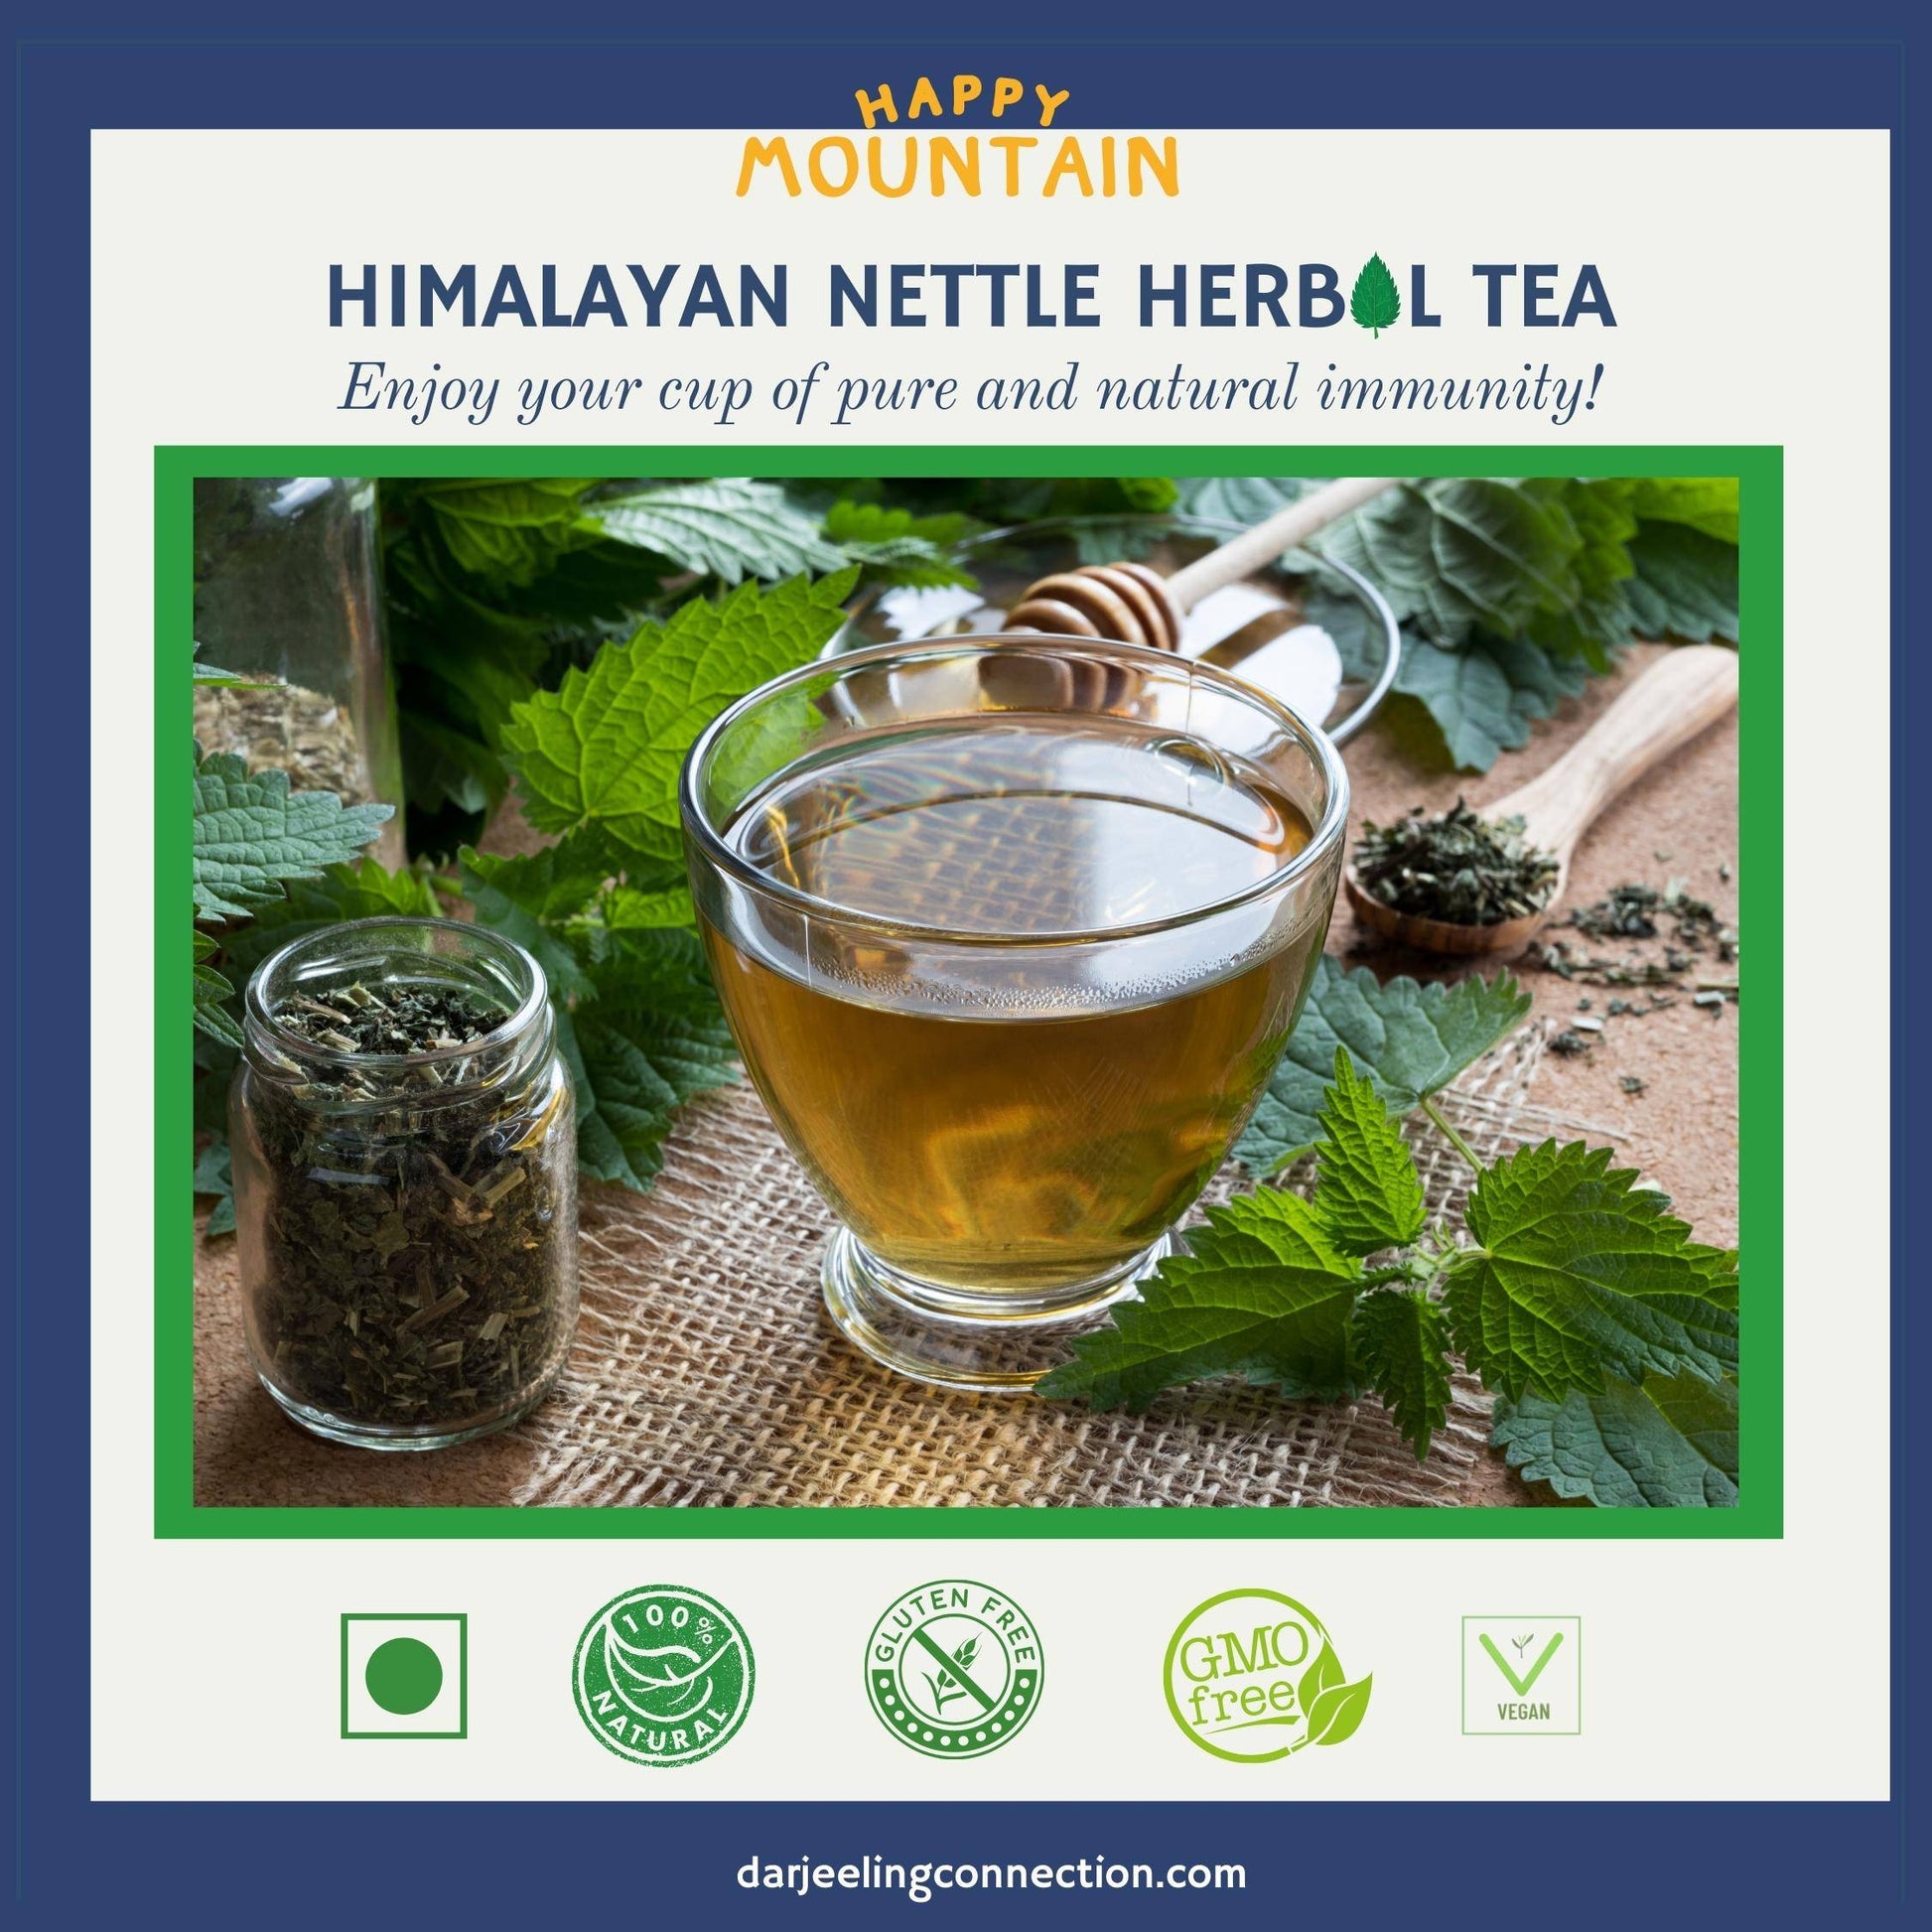 Himalayan Nettle Herbal Tea - Happy Mountain